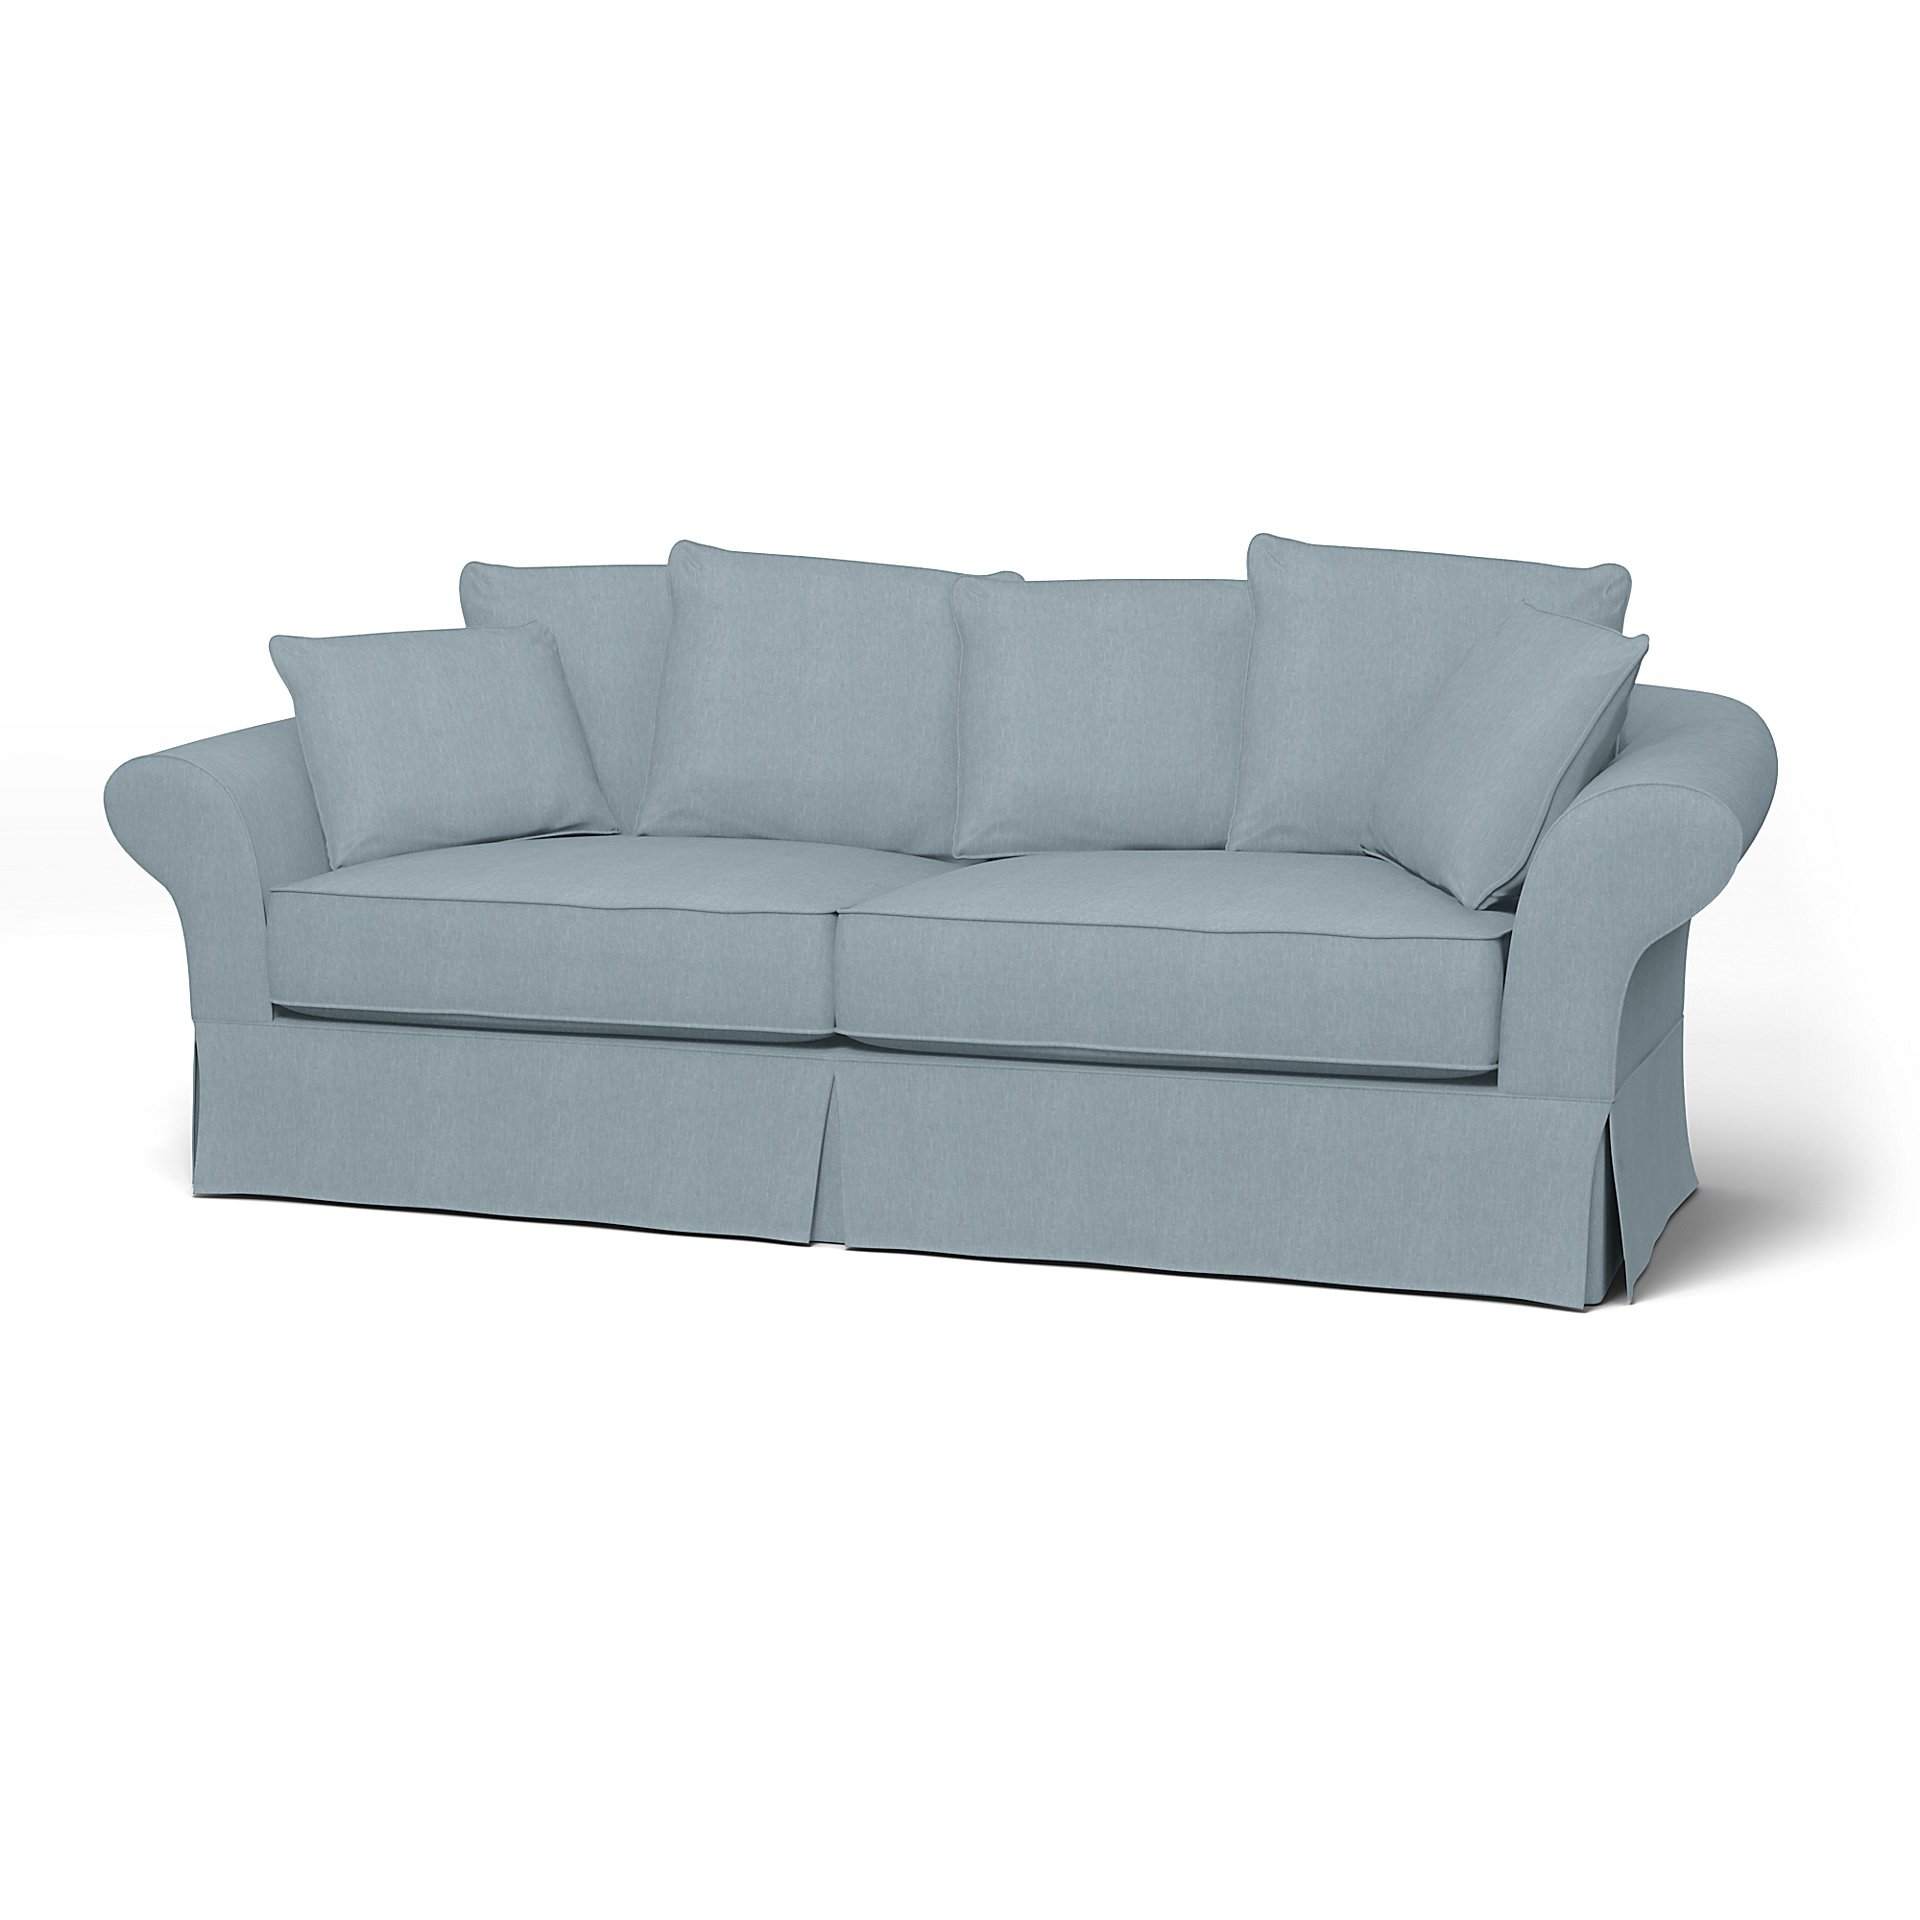 IKEA - Backamo 3 Seater Sofa Cover, Dusty Blue, Linen - Bemz